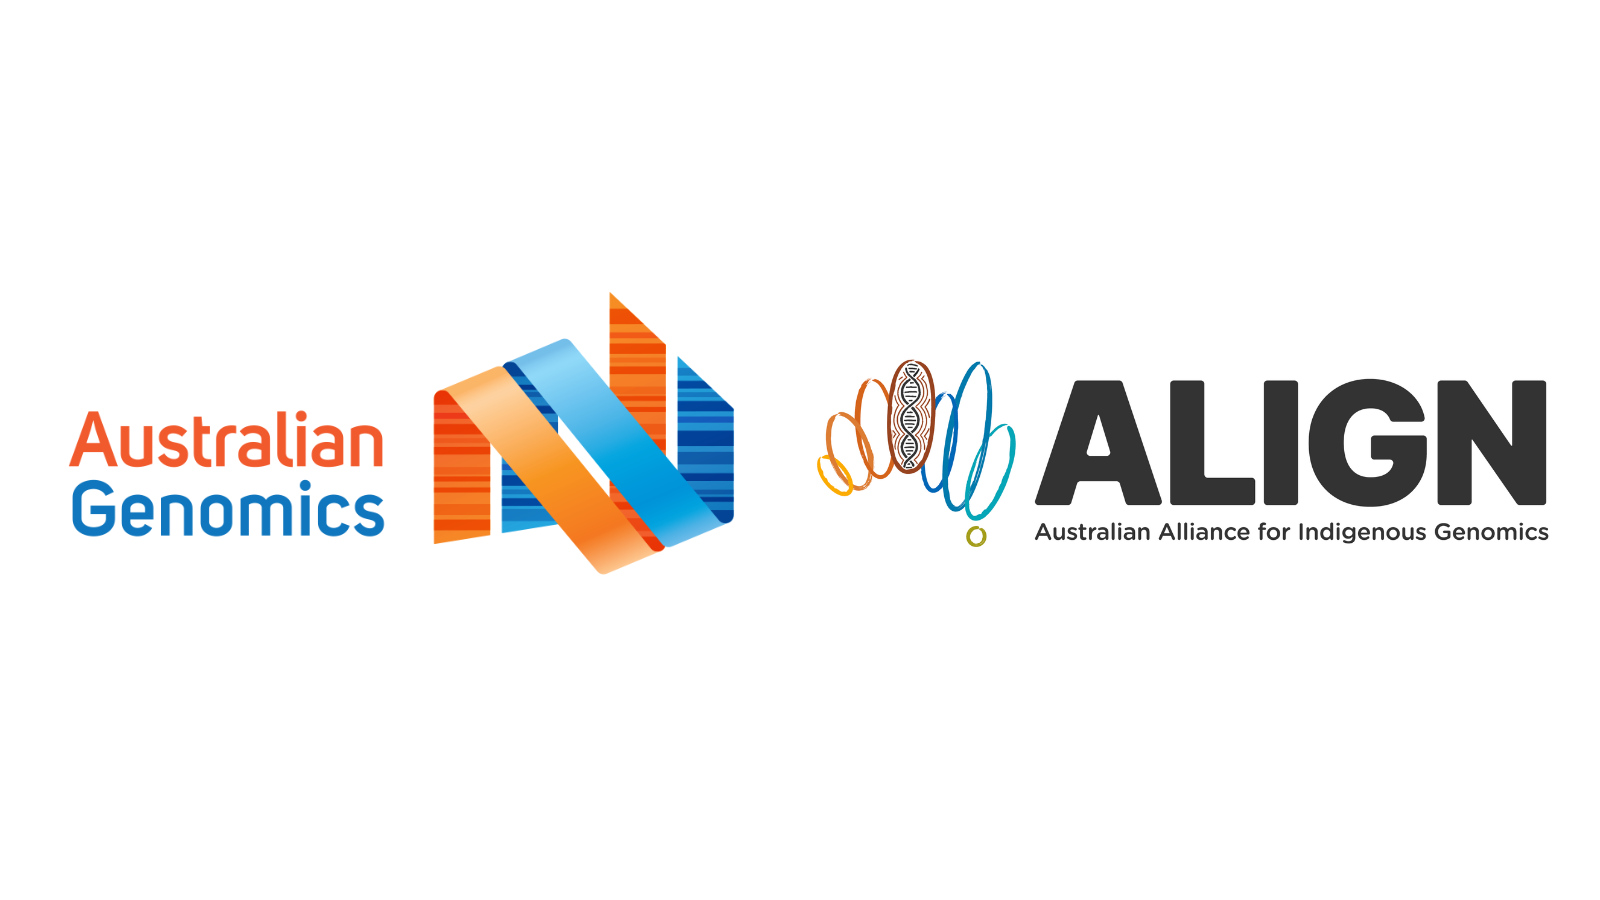 Australian Genomics and the Australian Alliance for Indigenous Genomics logos